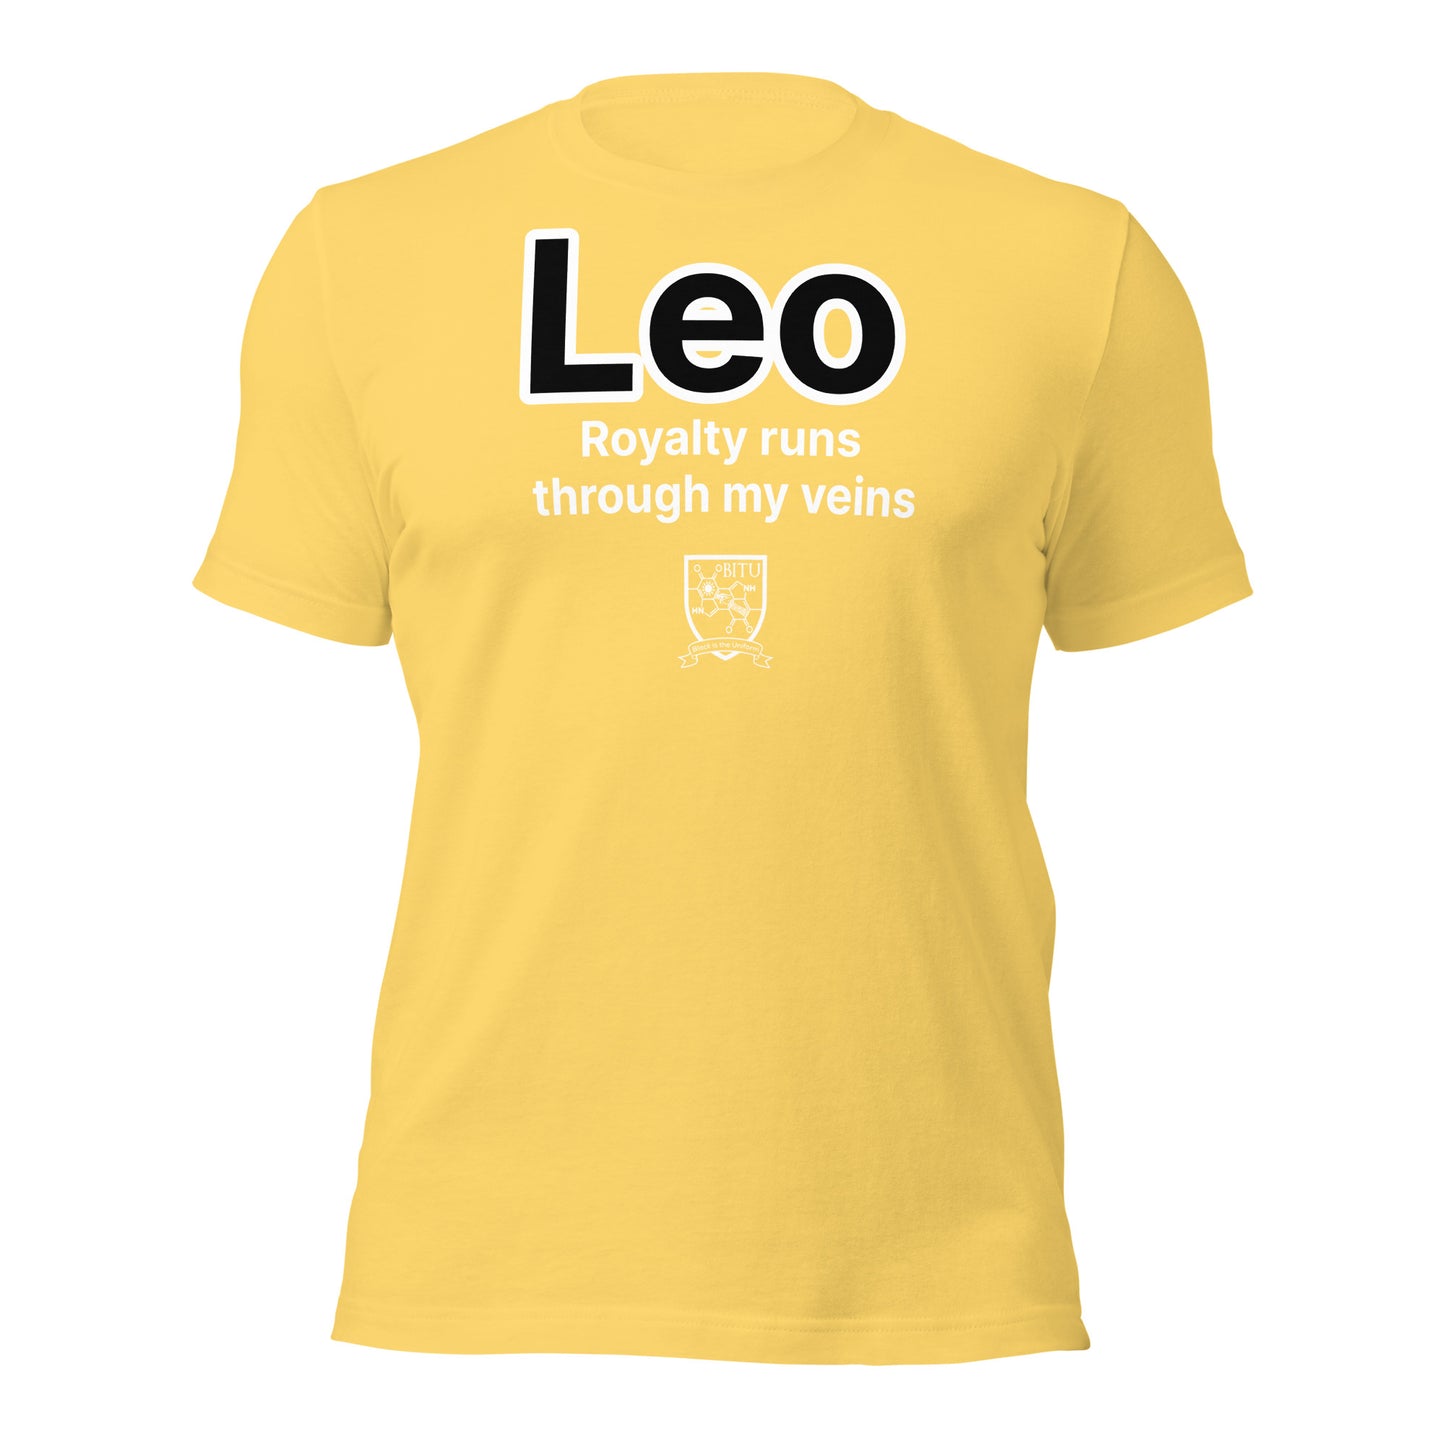 Leo - Royalty runs through my veins